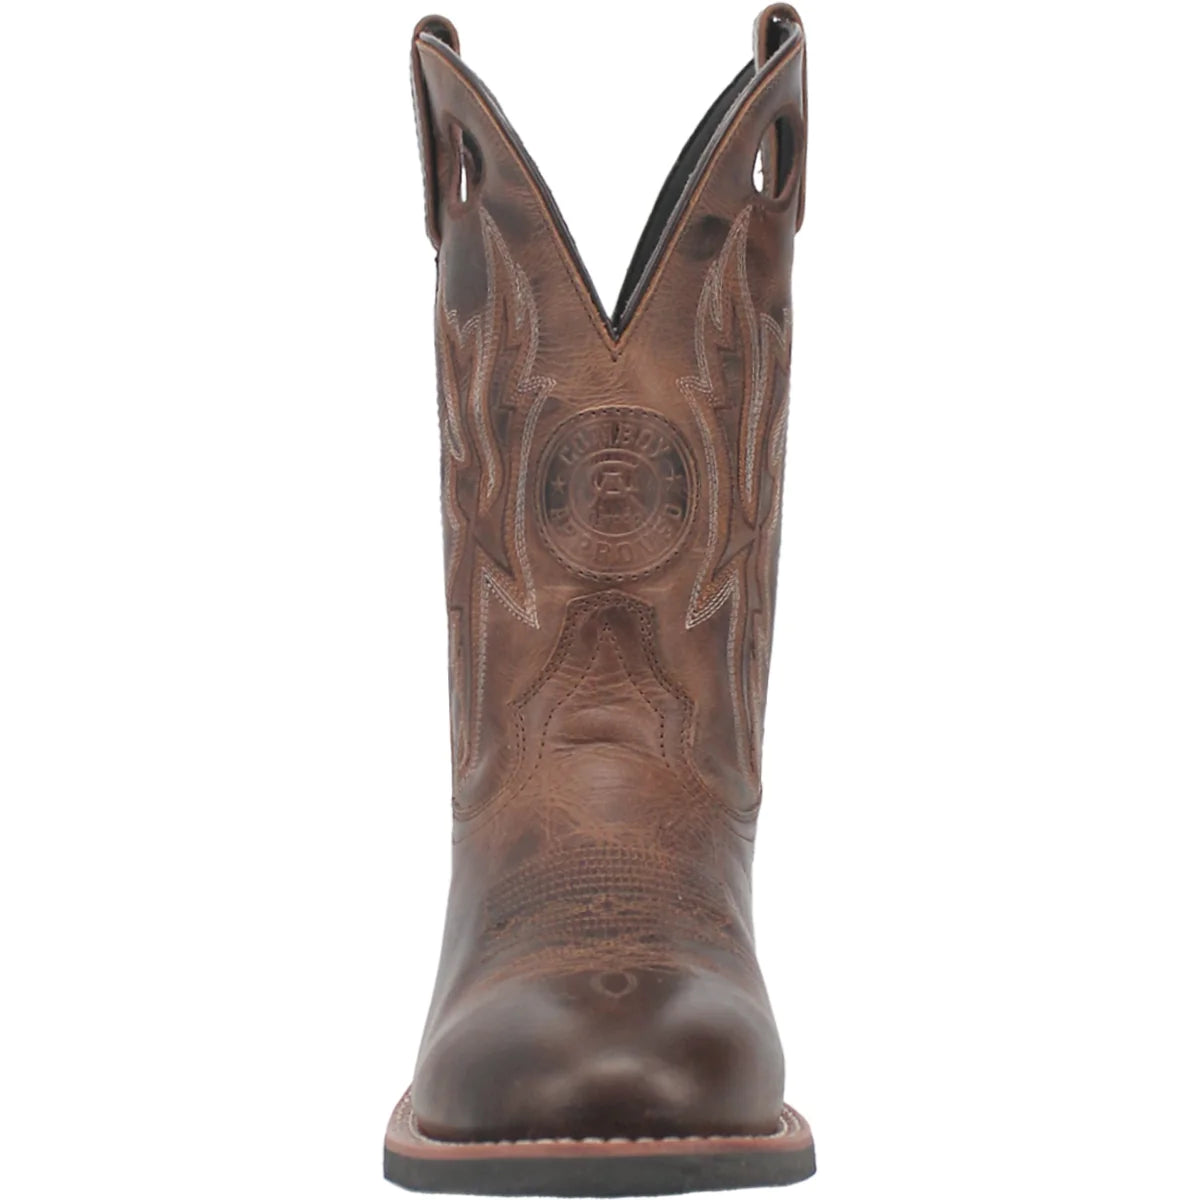 Laredo Men's Dawson Brown Leather Boots